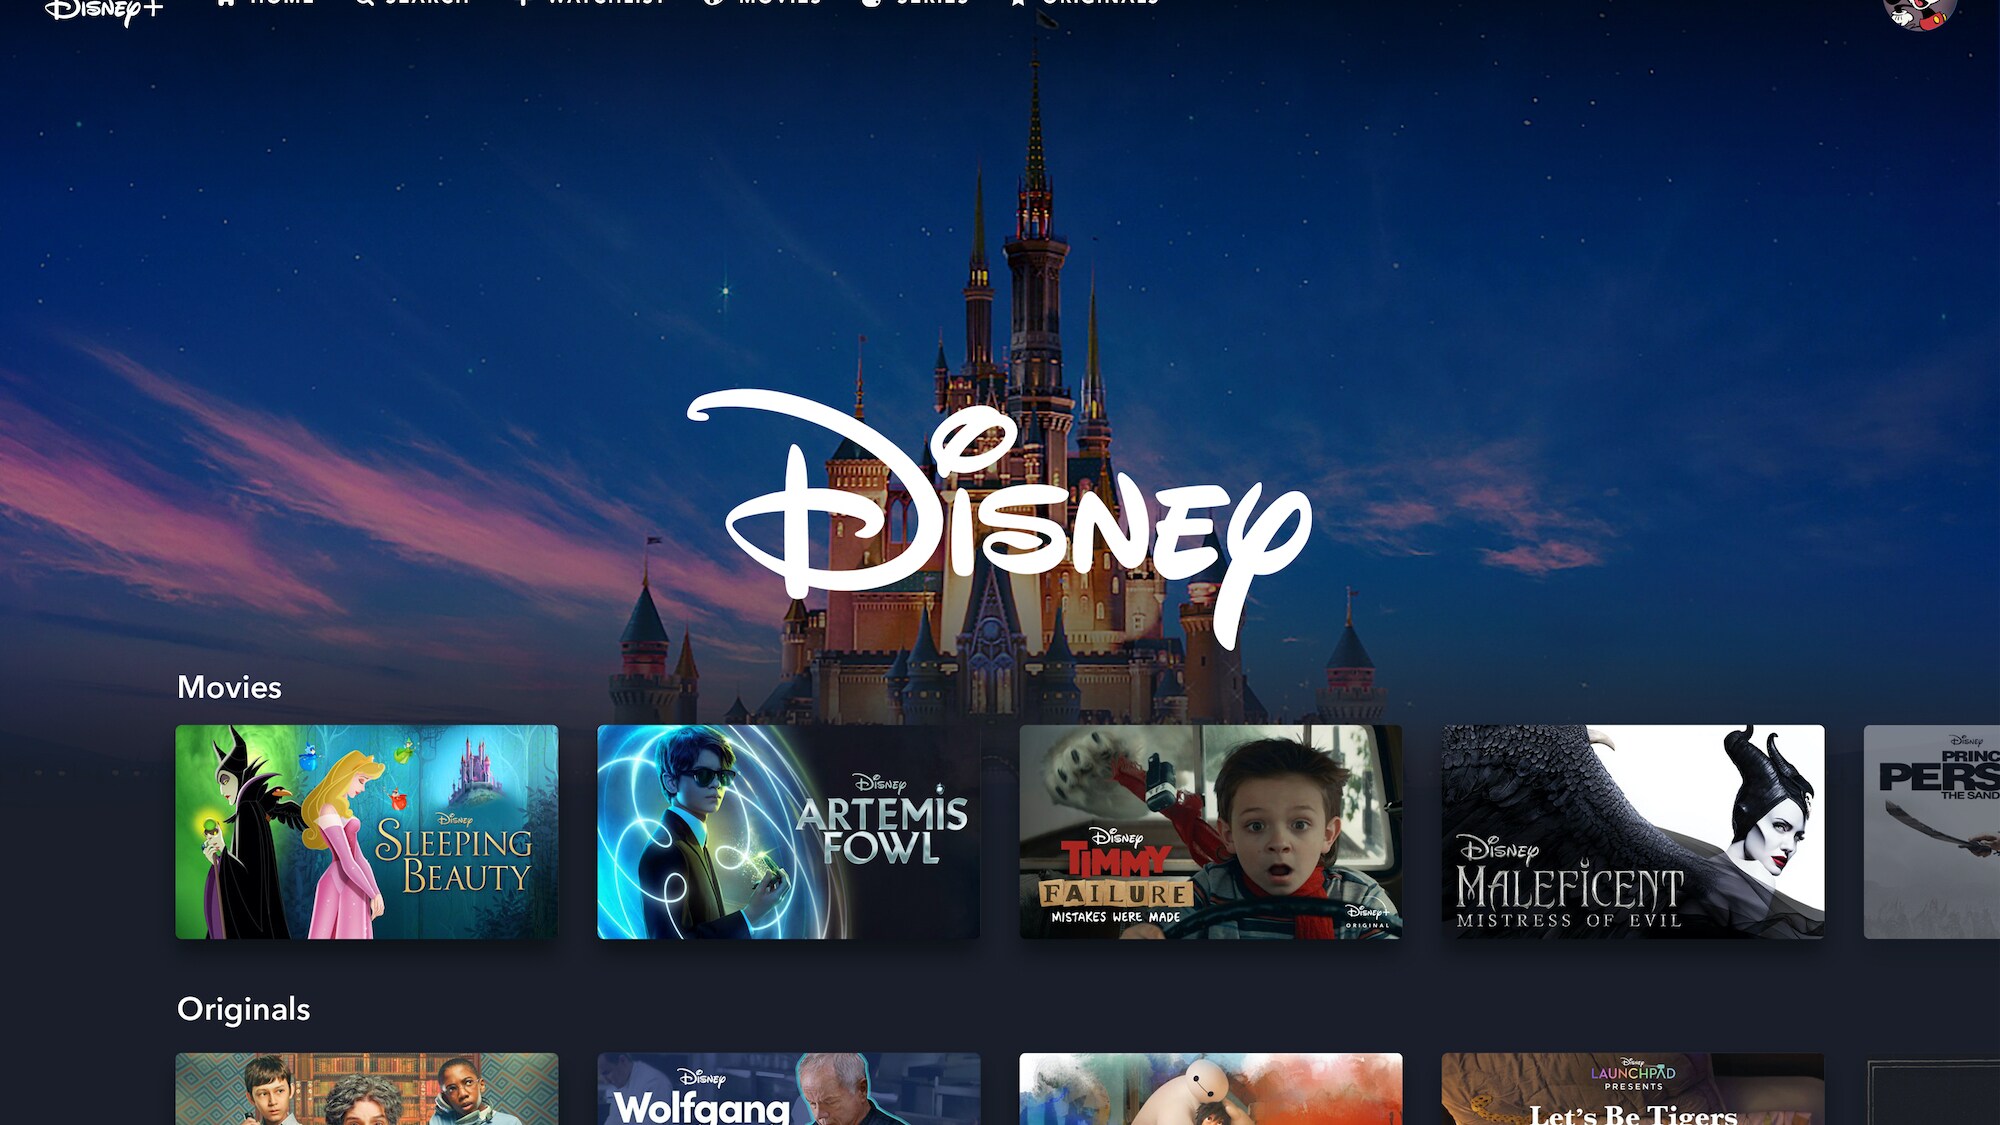 Disney+ Brand Landing Page on Web